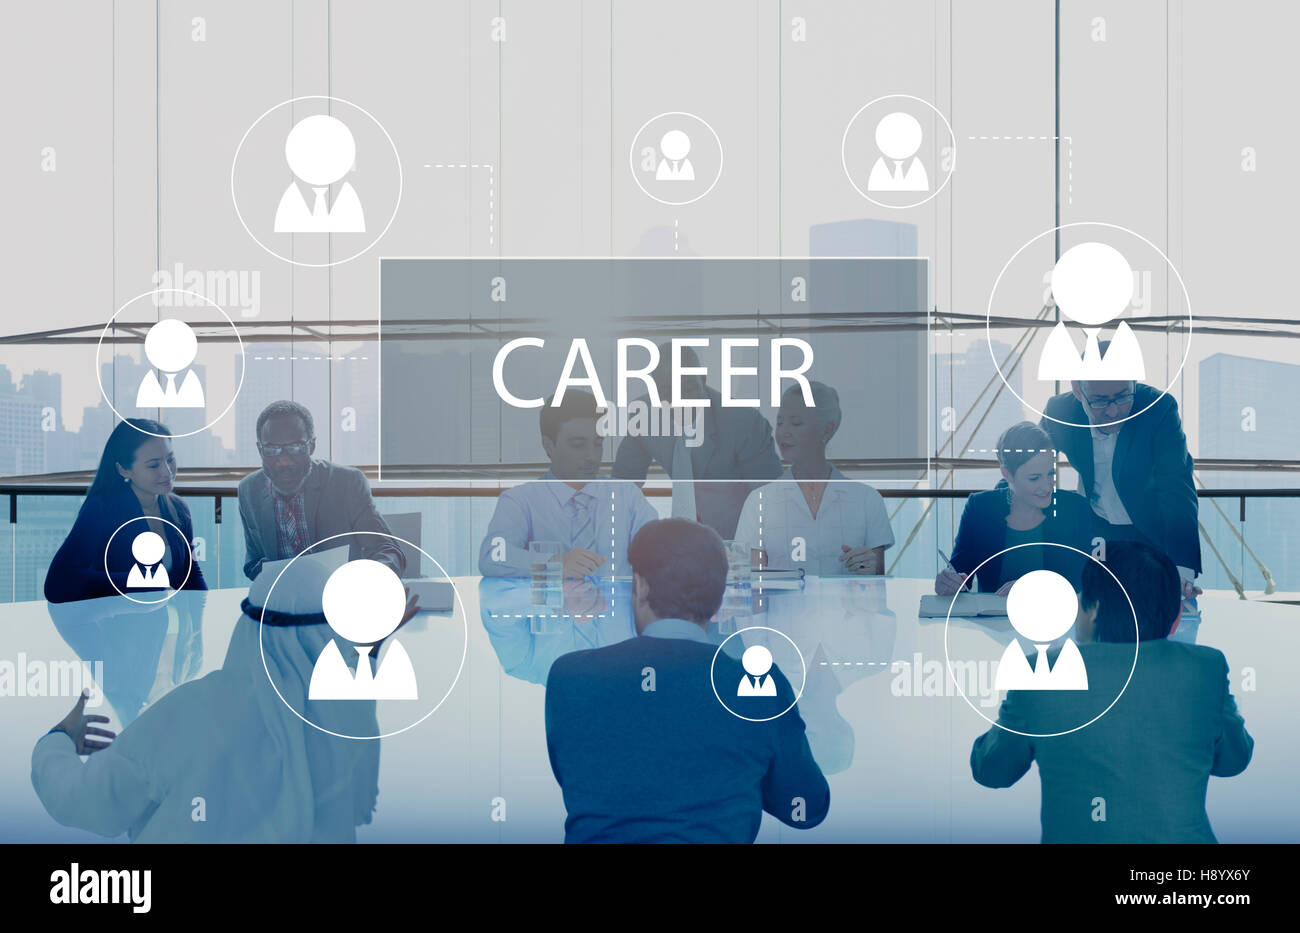 Recruitment Hiring Career job Emplyment Concept Stock Photo